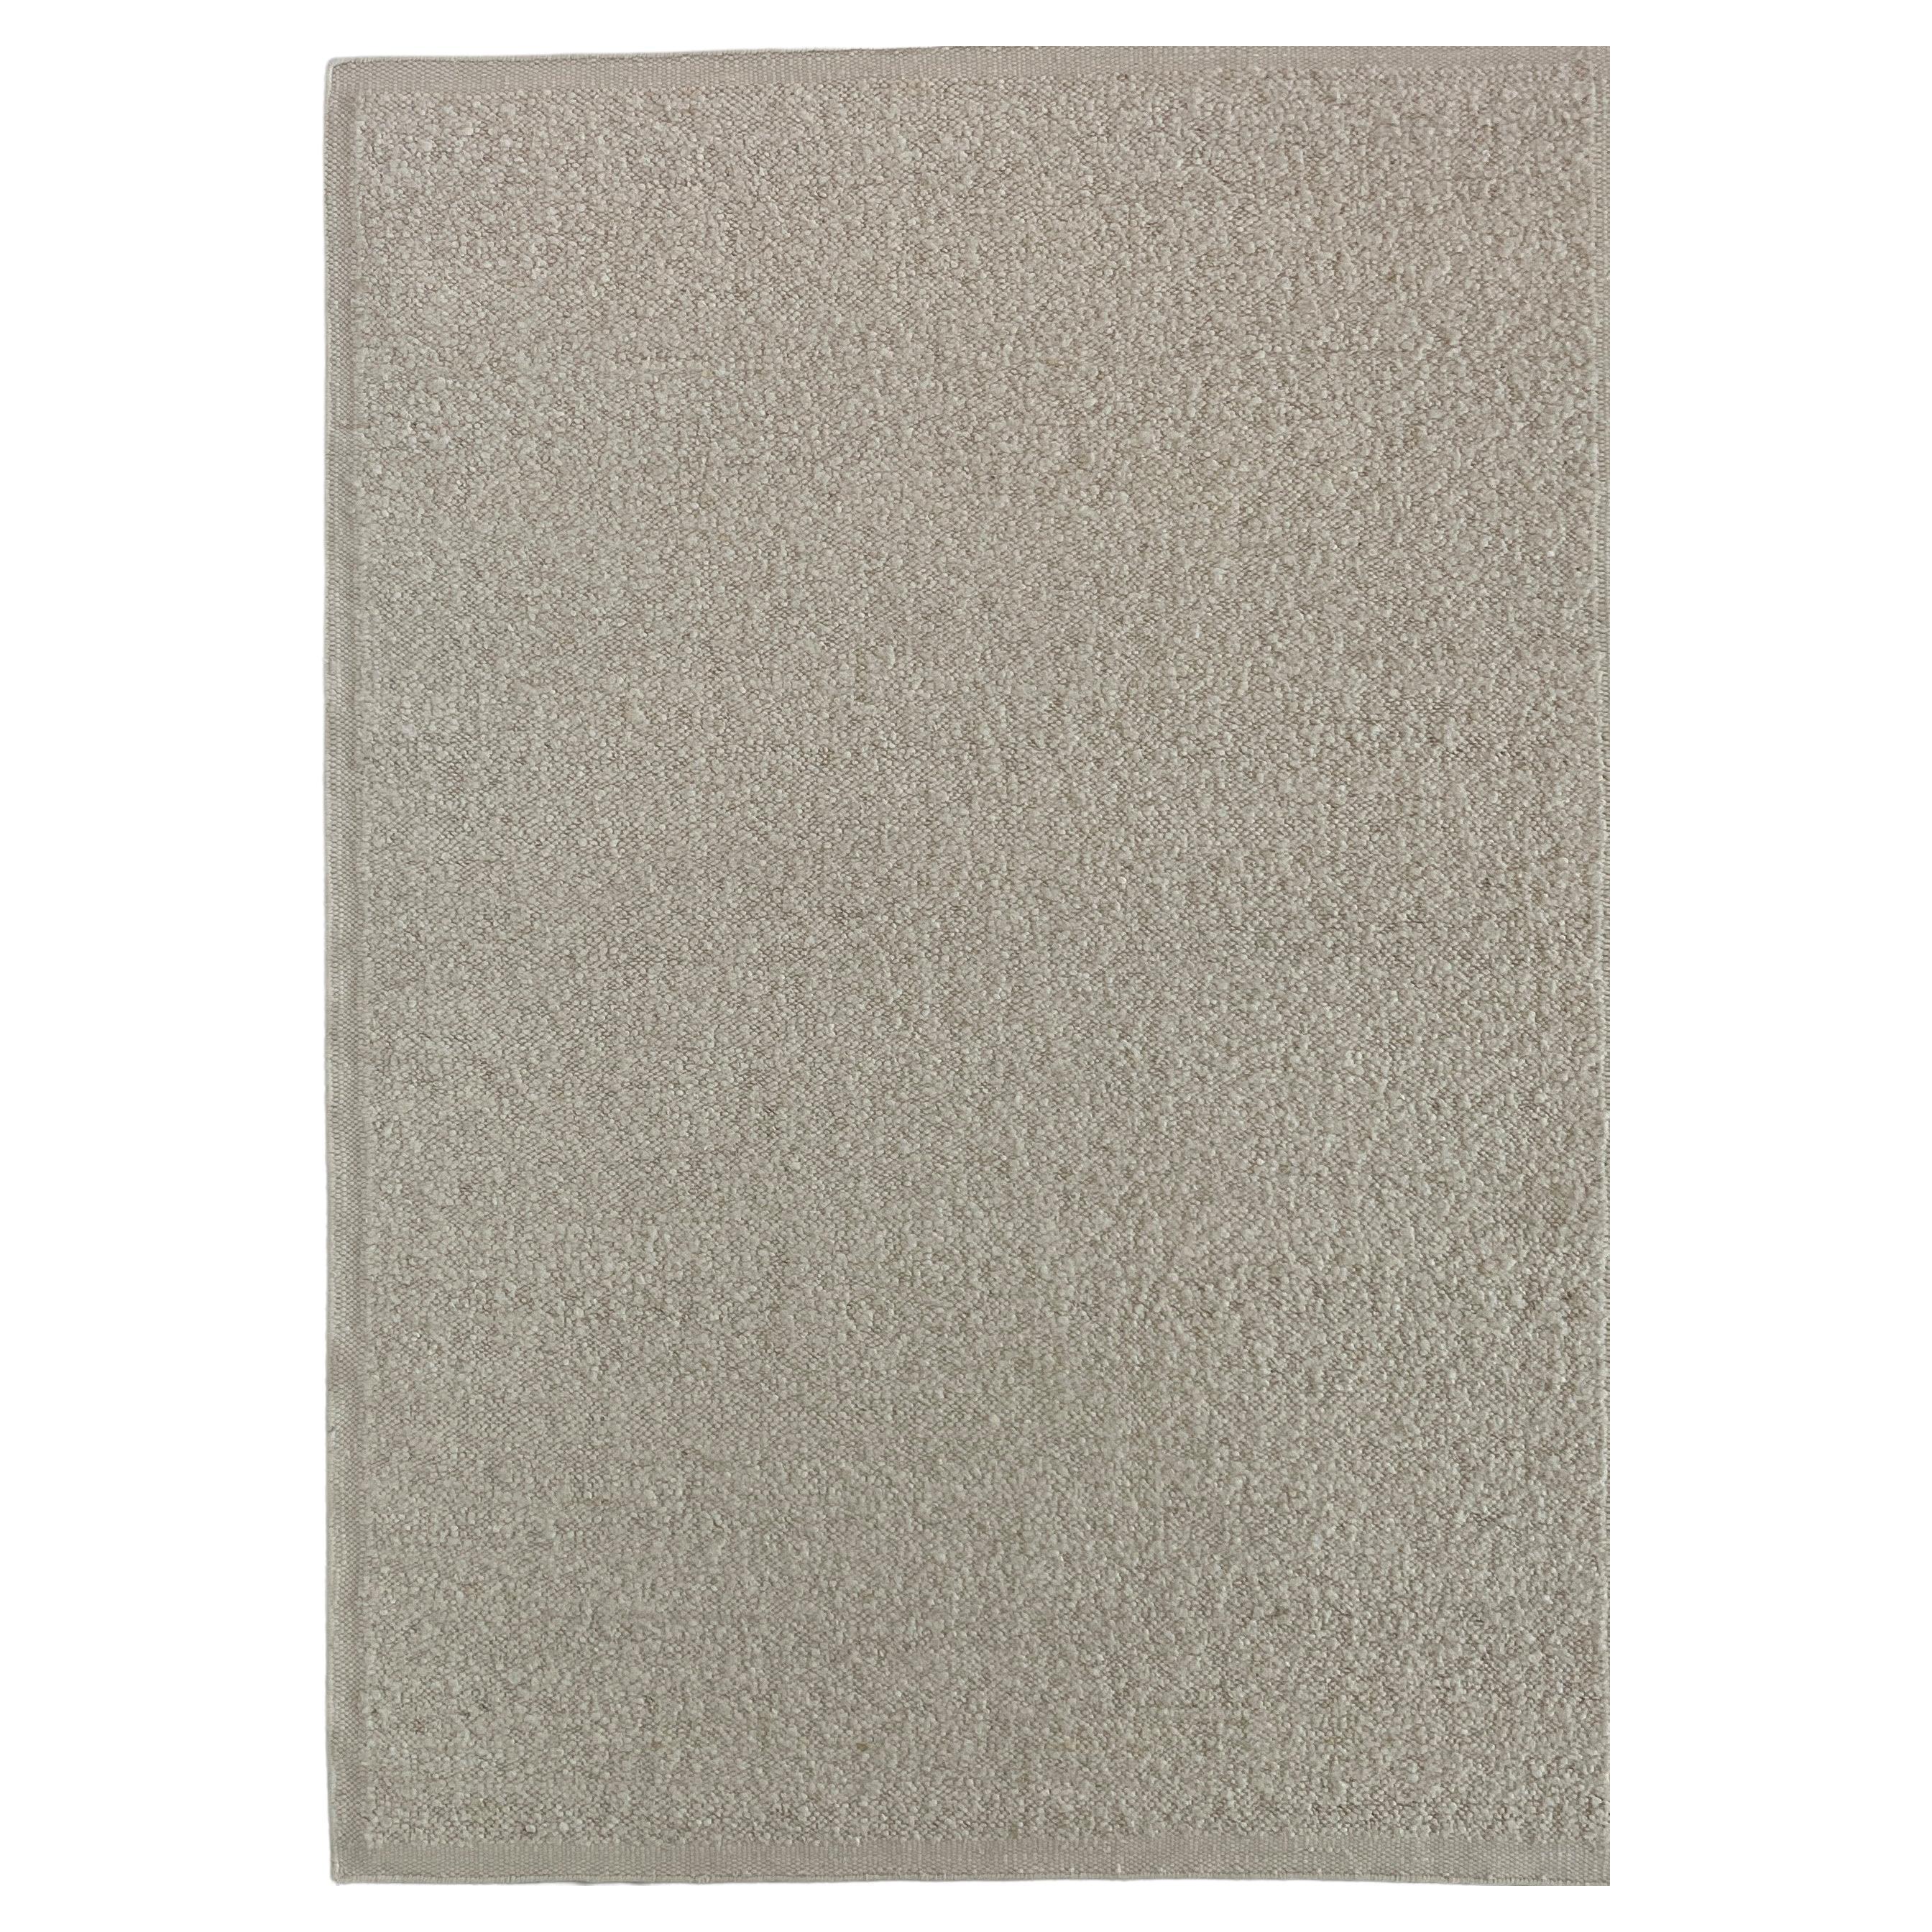 Snow Rug - Wool Off White Cream Plain Carpet